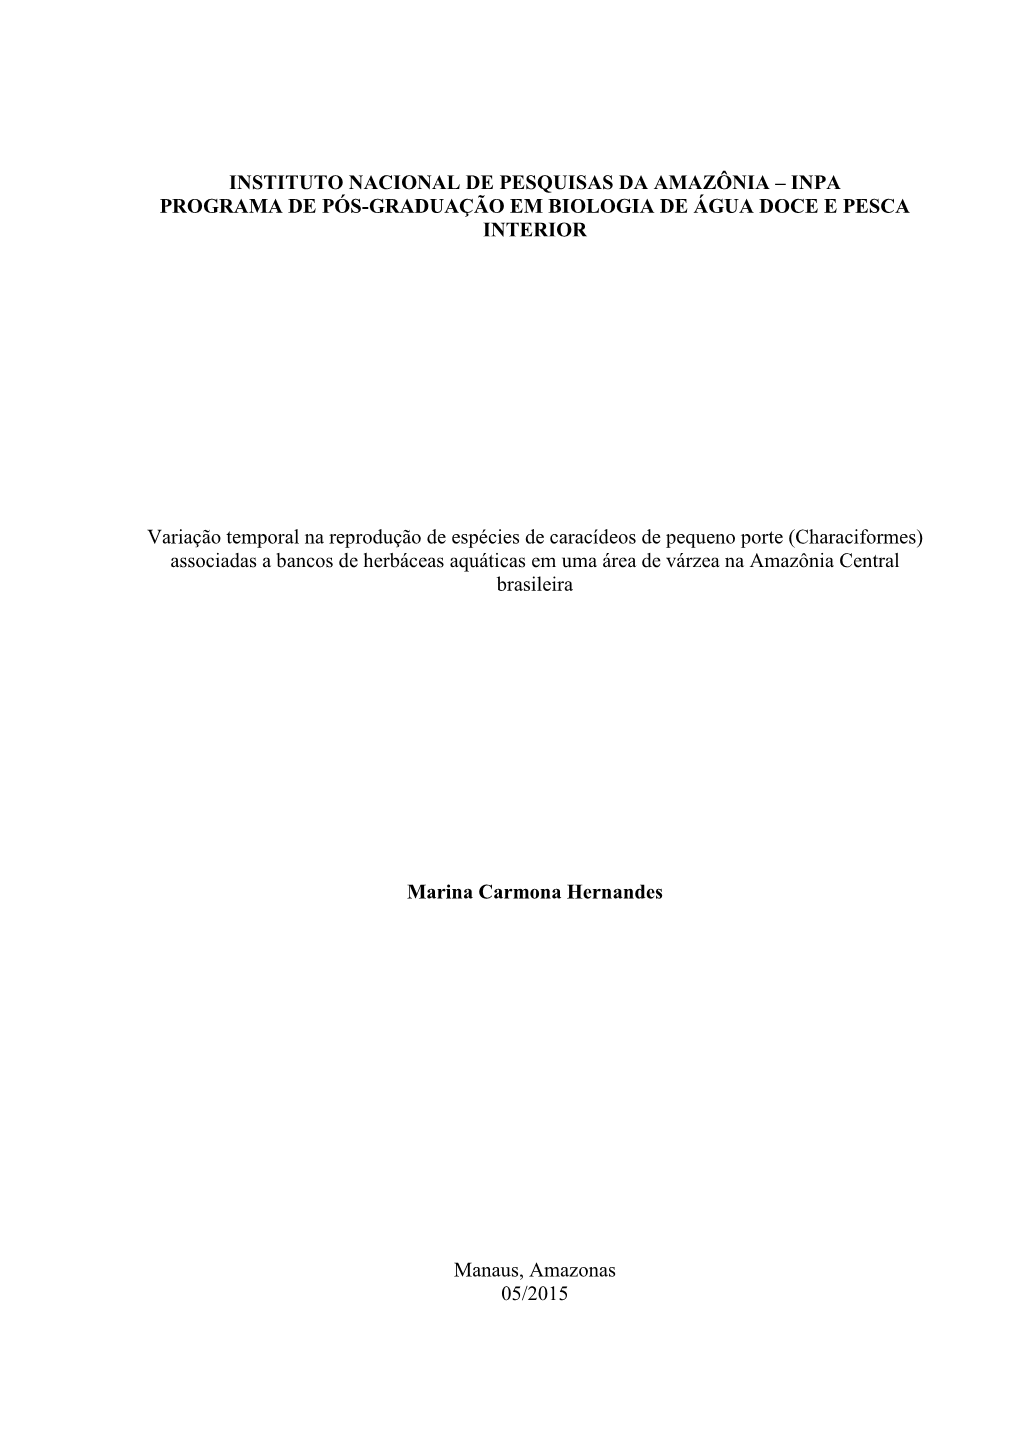 Dissertação Marina Carmona Hernandes.Pdf